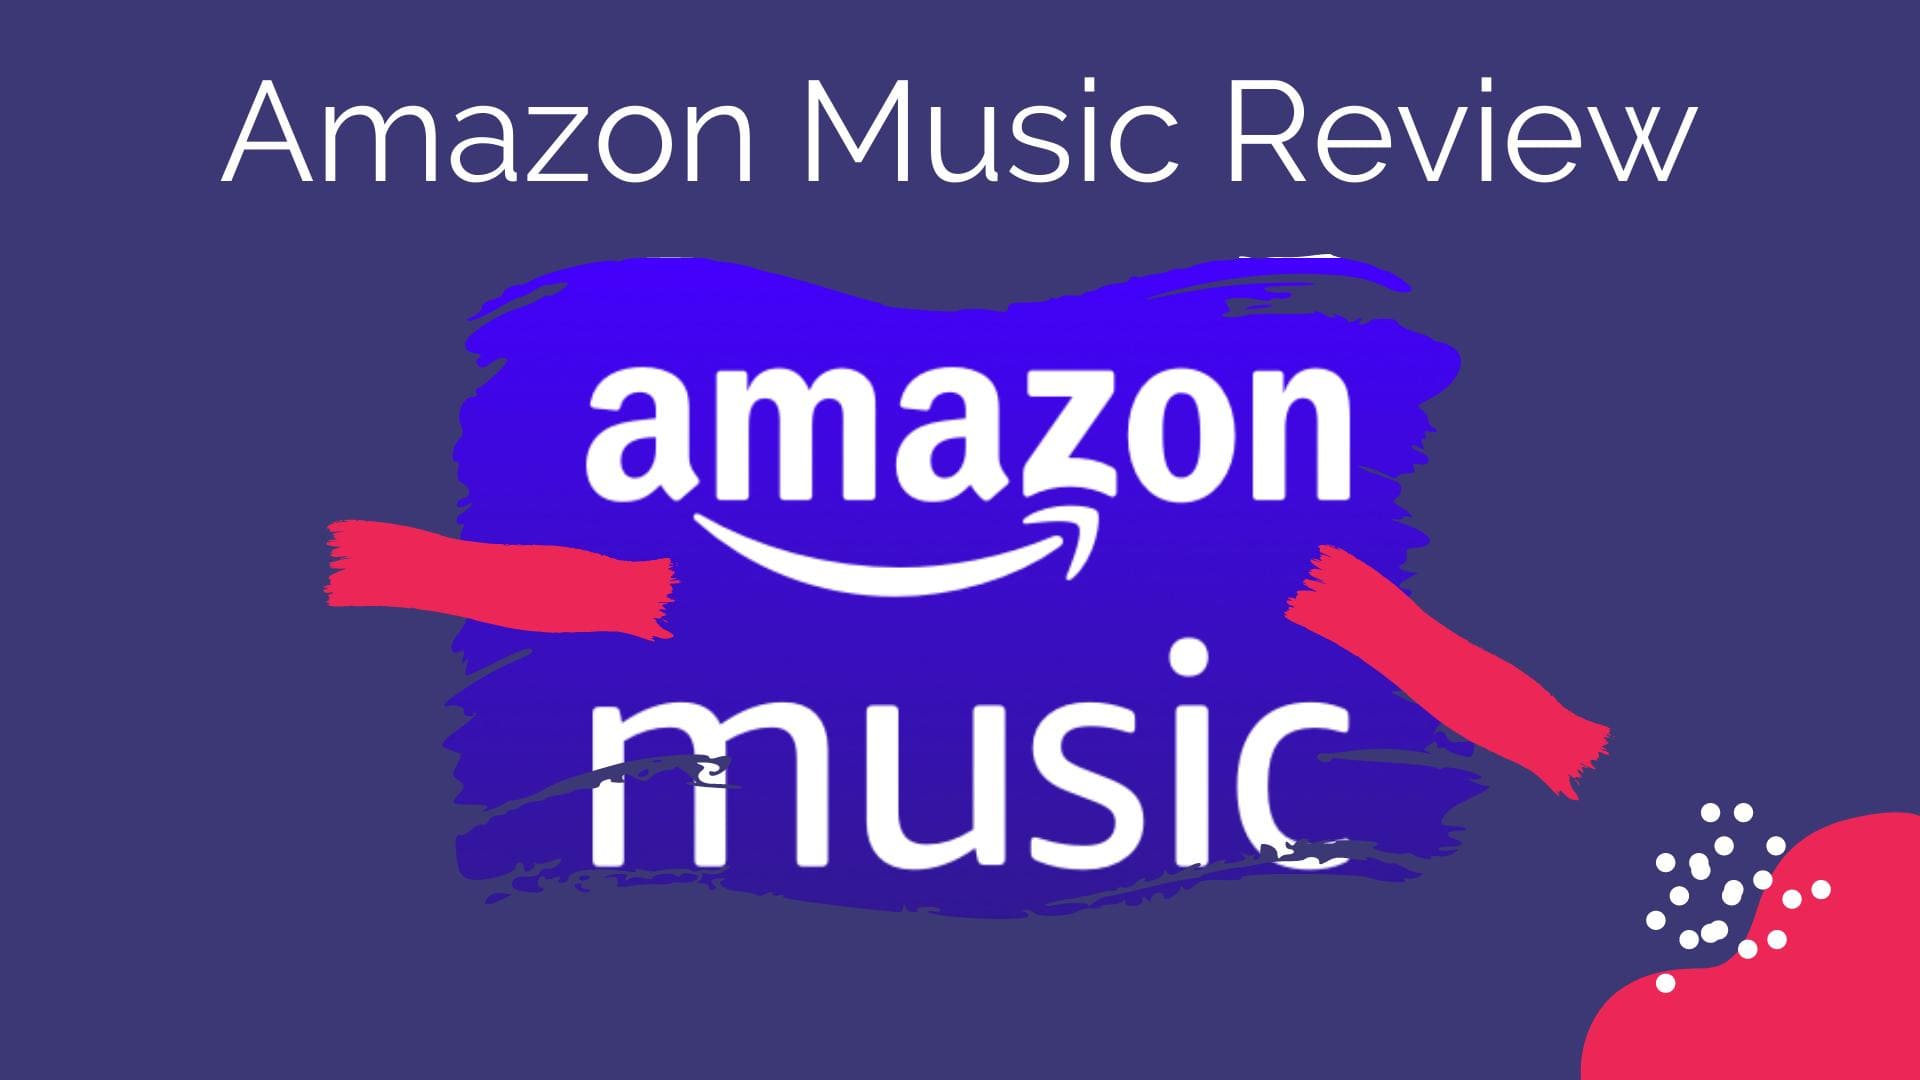 Peak View Marketing - Amazon Music Review